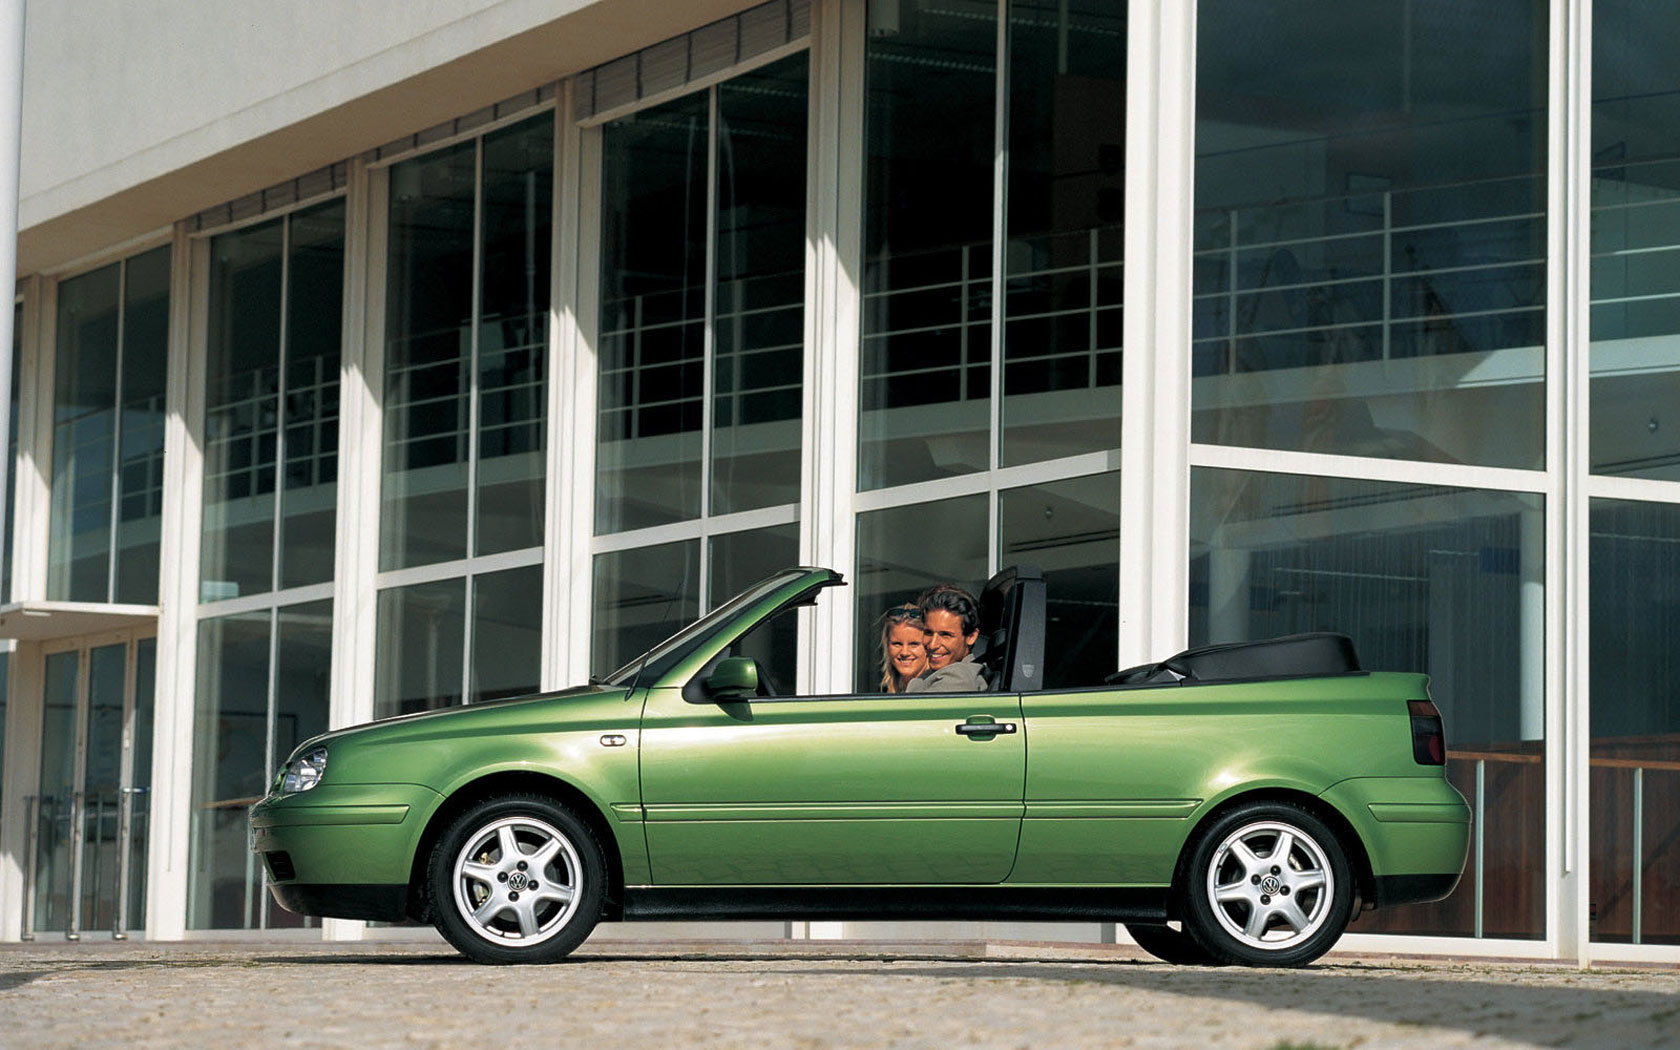  Volkswagen Golf Cabrio (1998-2002)